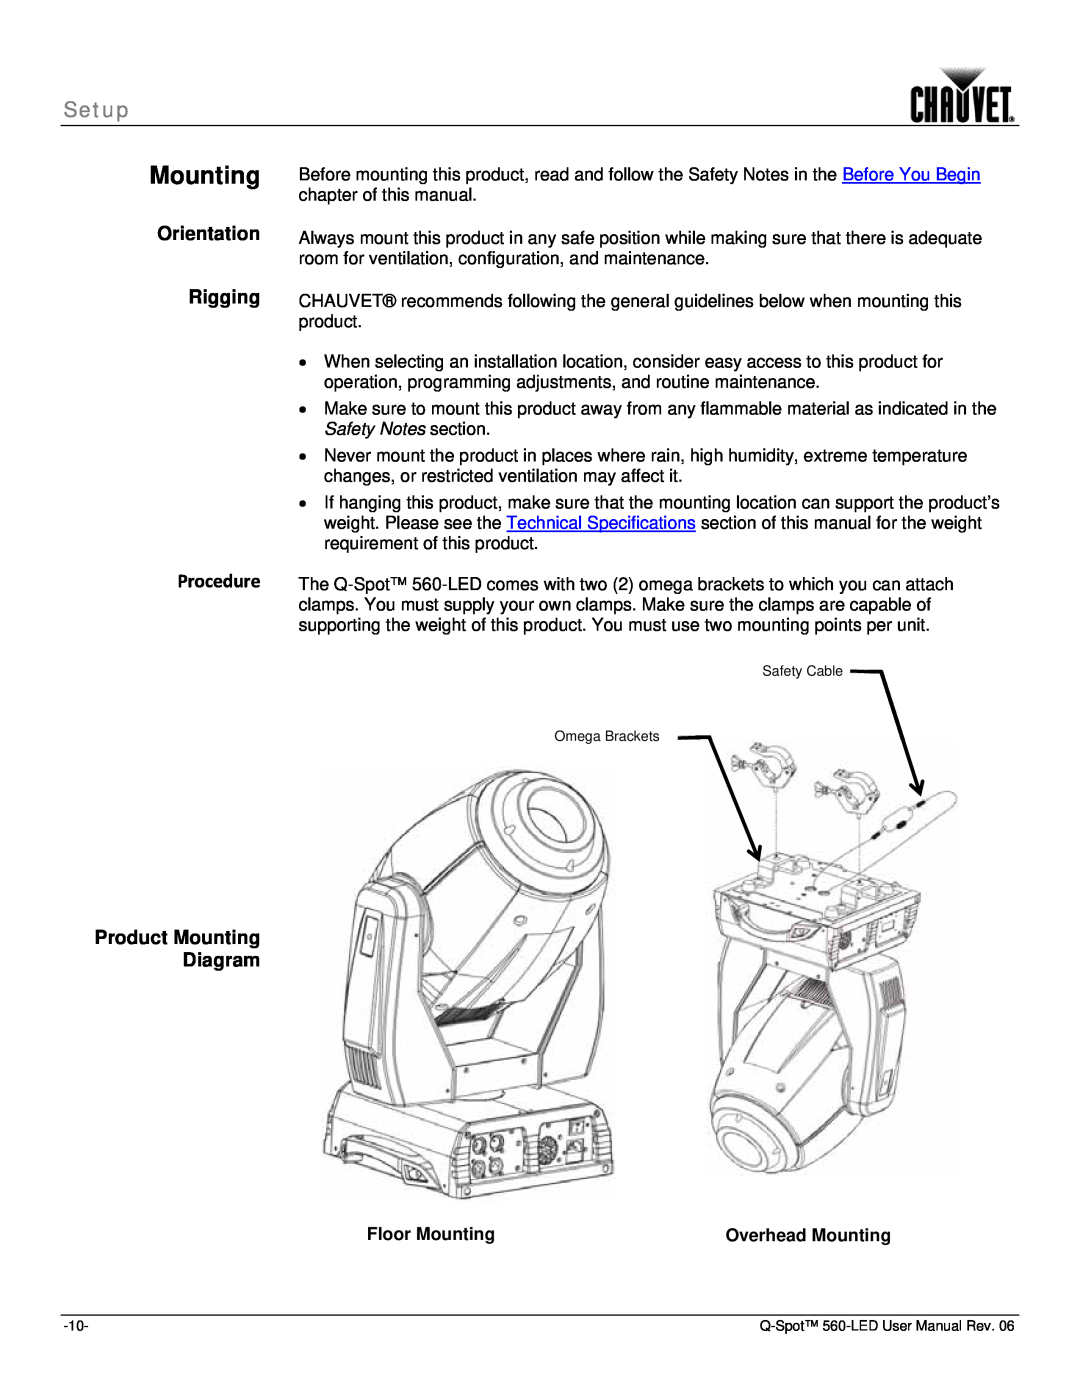 Chauvet 560 user manual Orientation, Rigging, Product Mounting Diagram, Setup, Procedure 